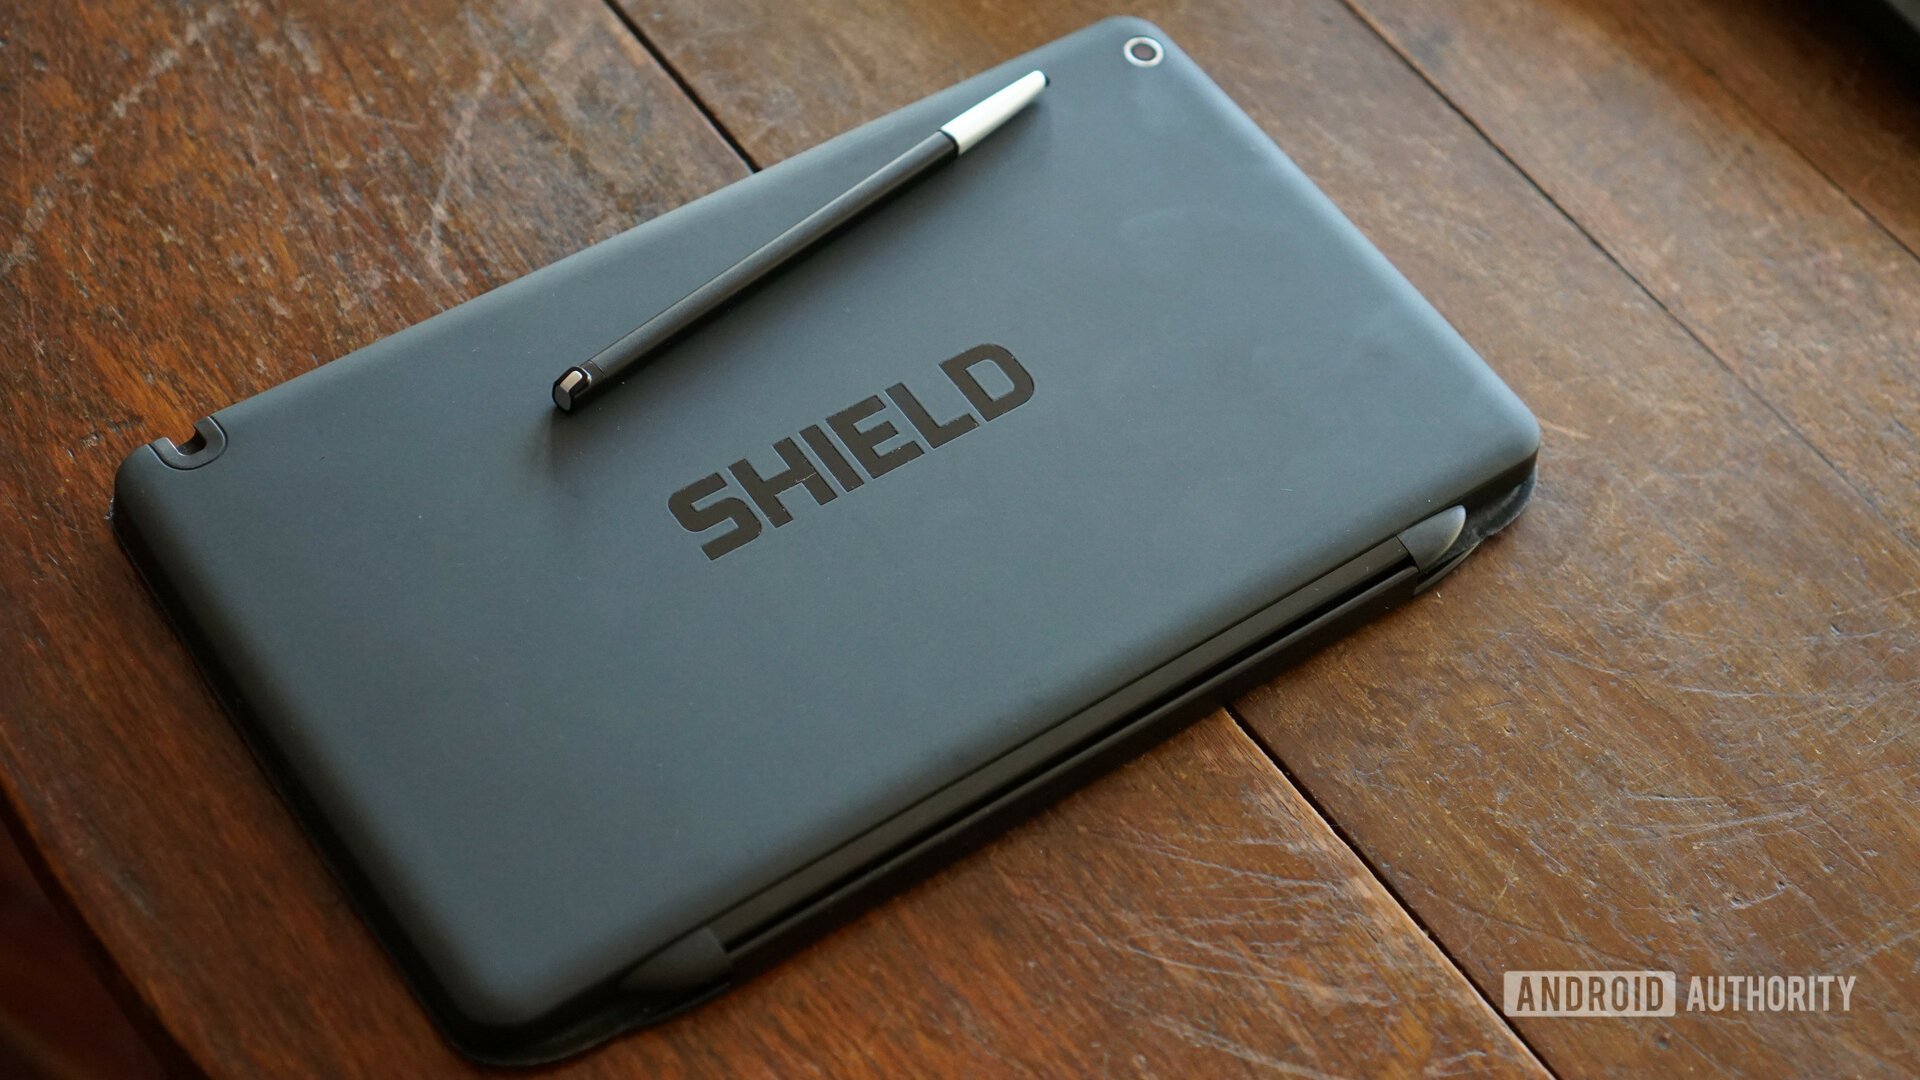 Tablet Nvidia Shield dan stylus diubah ukurannya